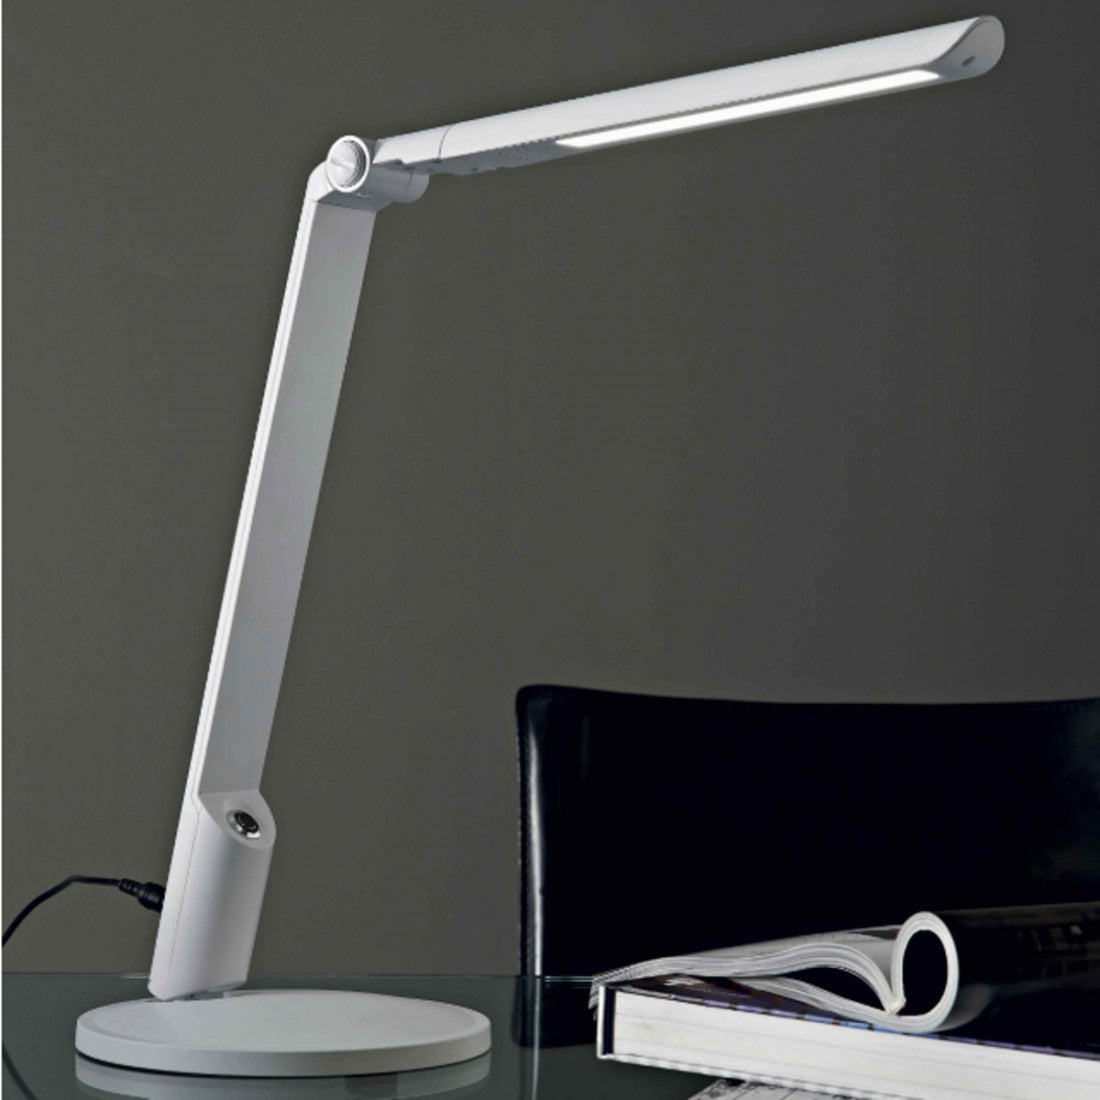 Abat-jour illuminando estra 9w led 3000°k 750lm abs dimmerabile lampada tavolo scrivania ip20, colore bianco